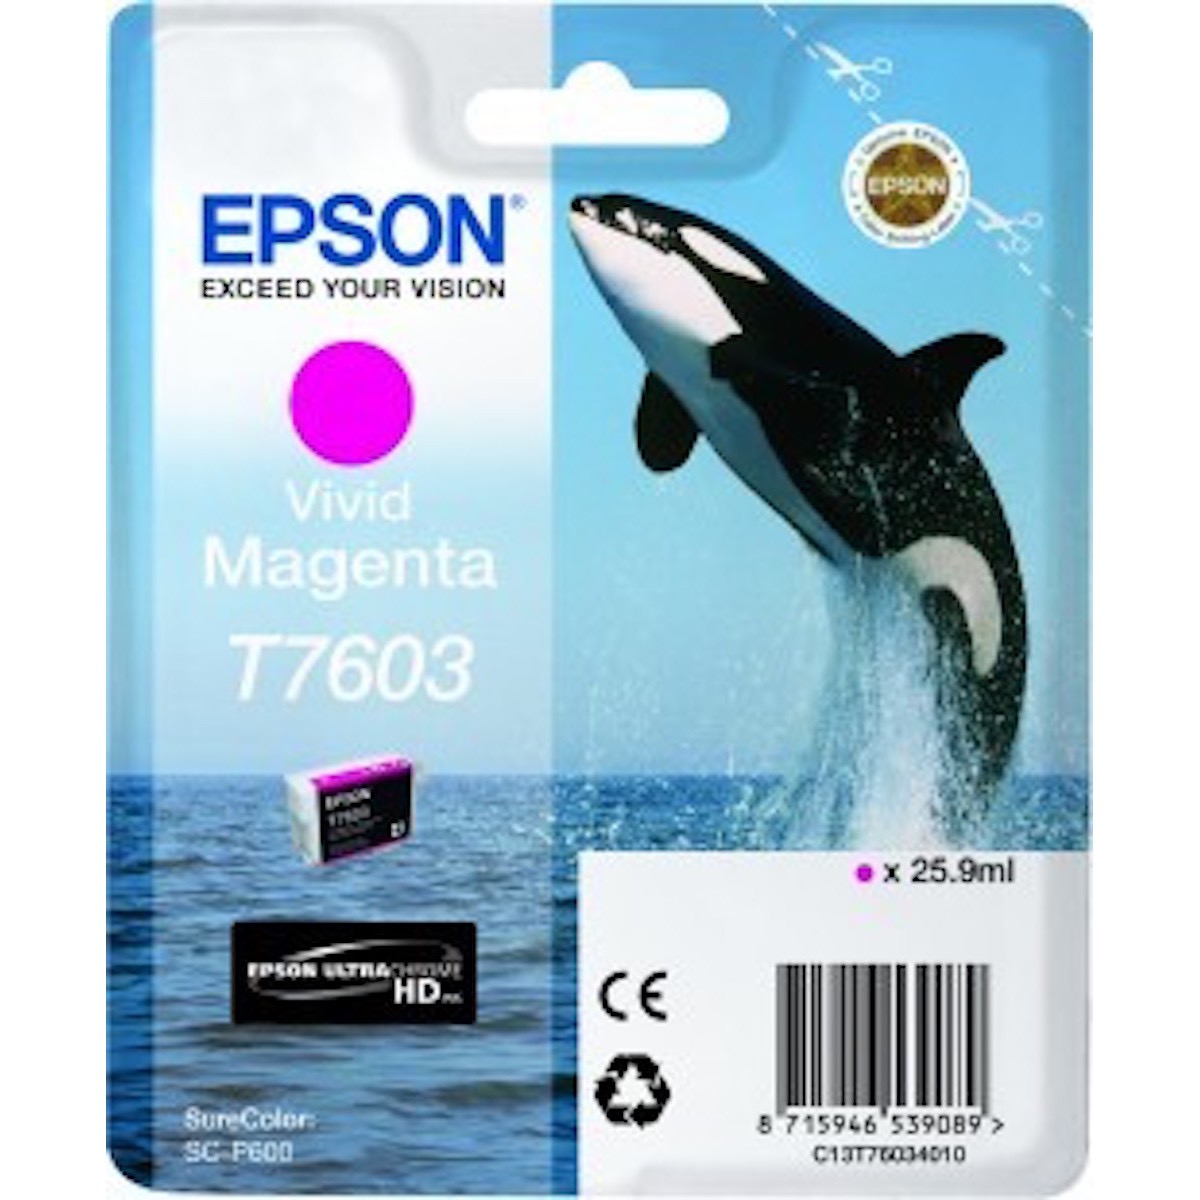 Epson T7603 vivid magenta Tinte